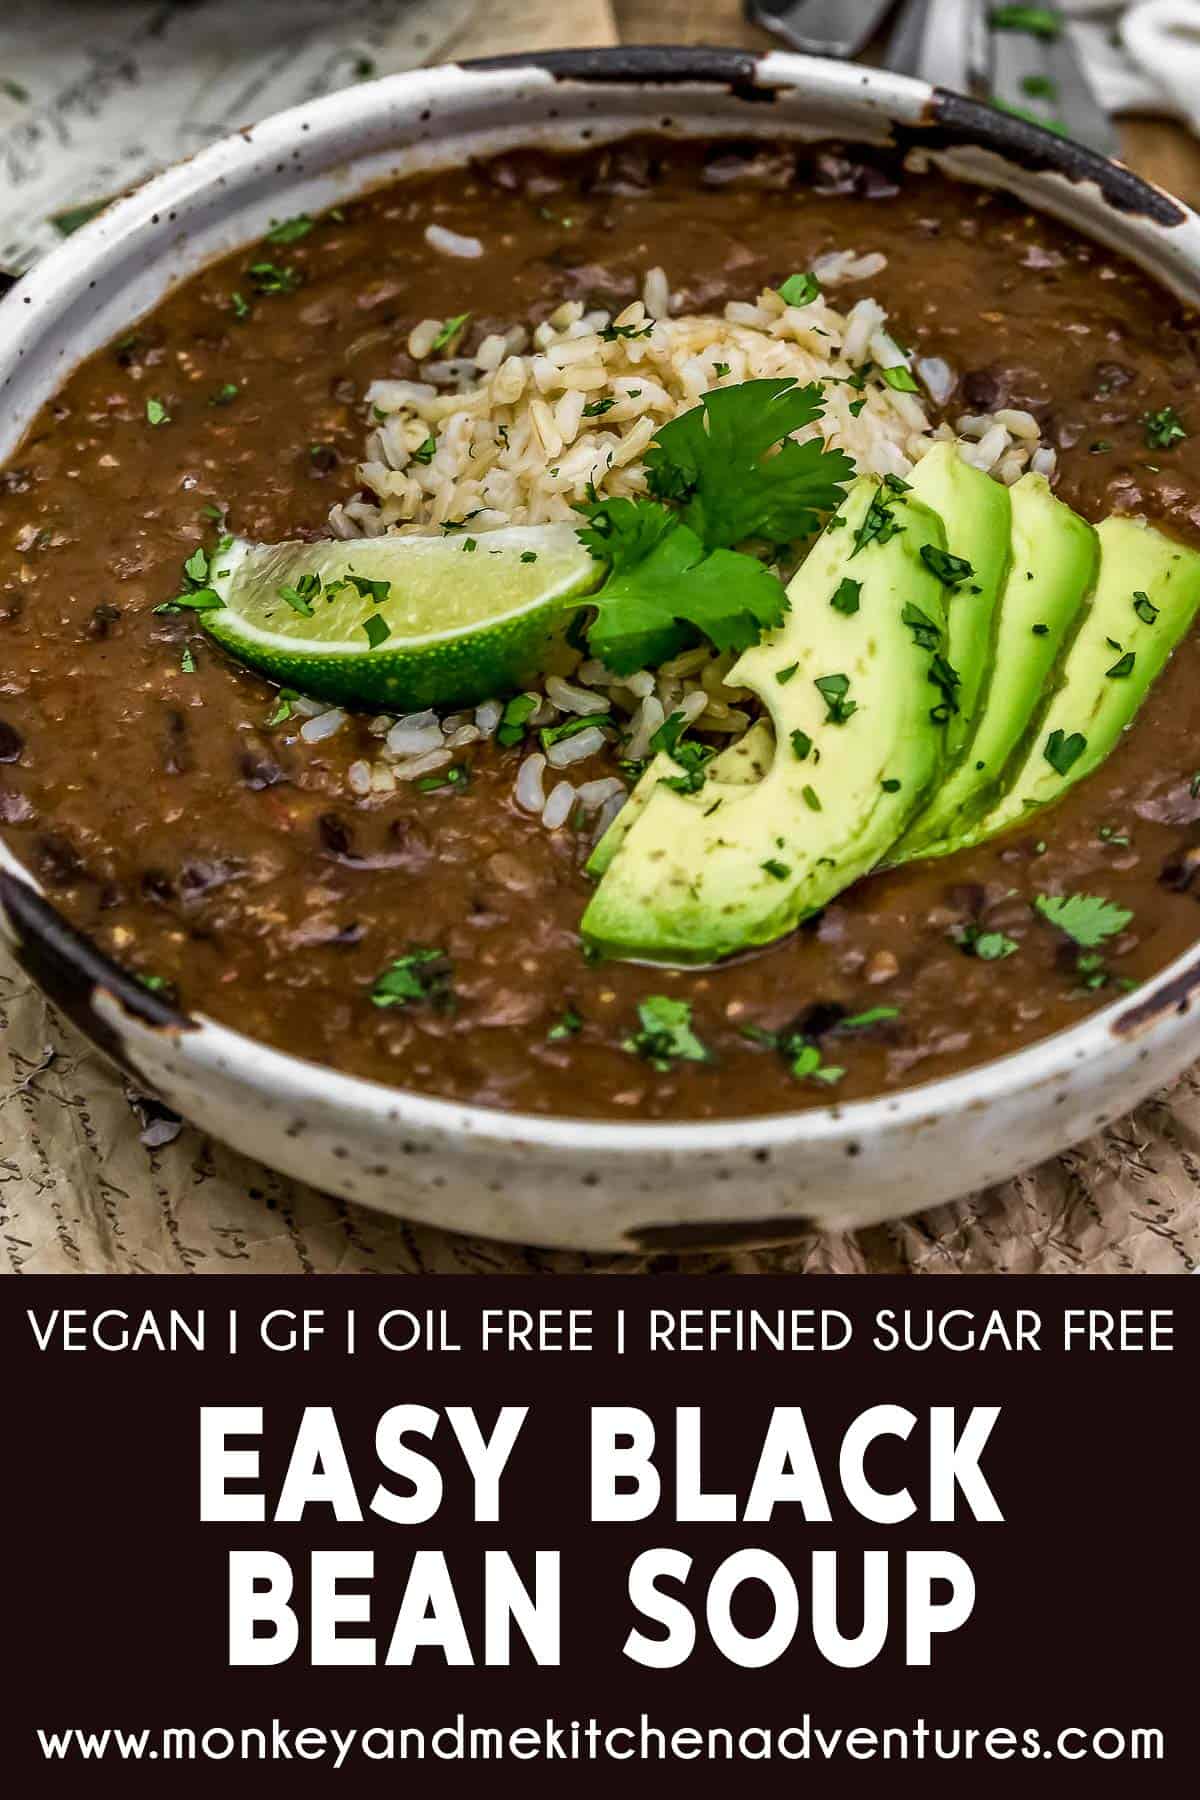 Easy Black Bean Soup with text description